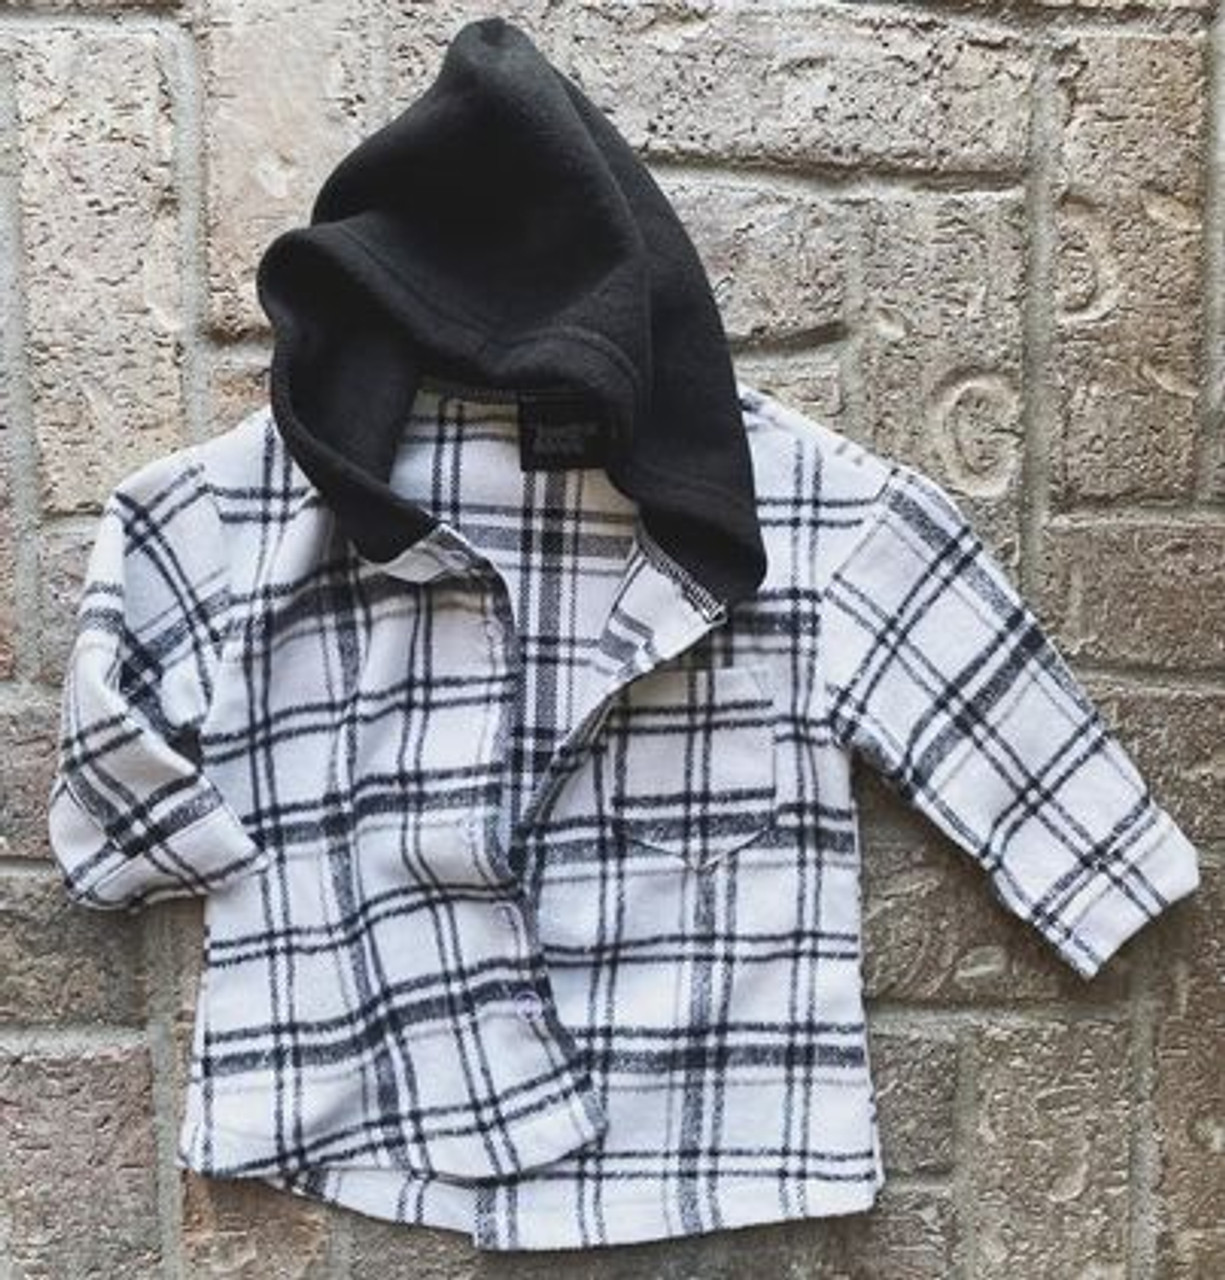 Black & White Plaid Hooded Flannel - Baby Kids